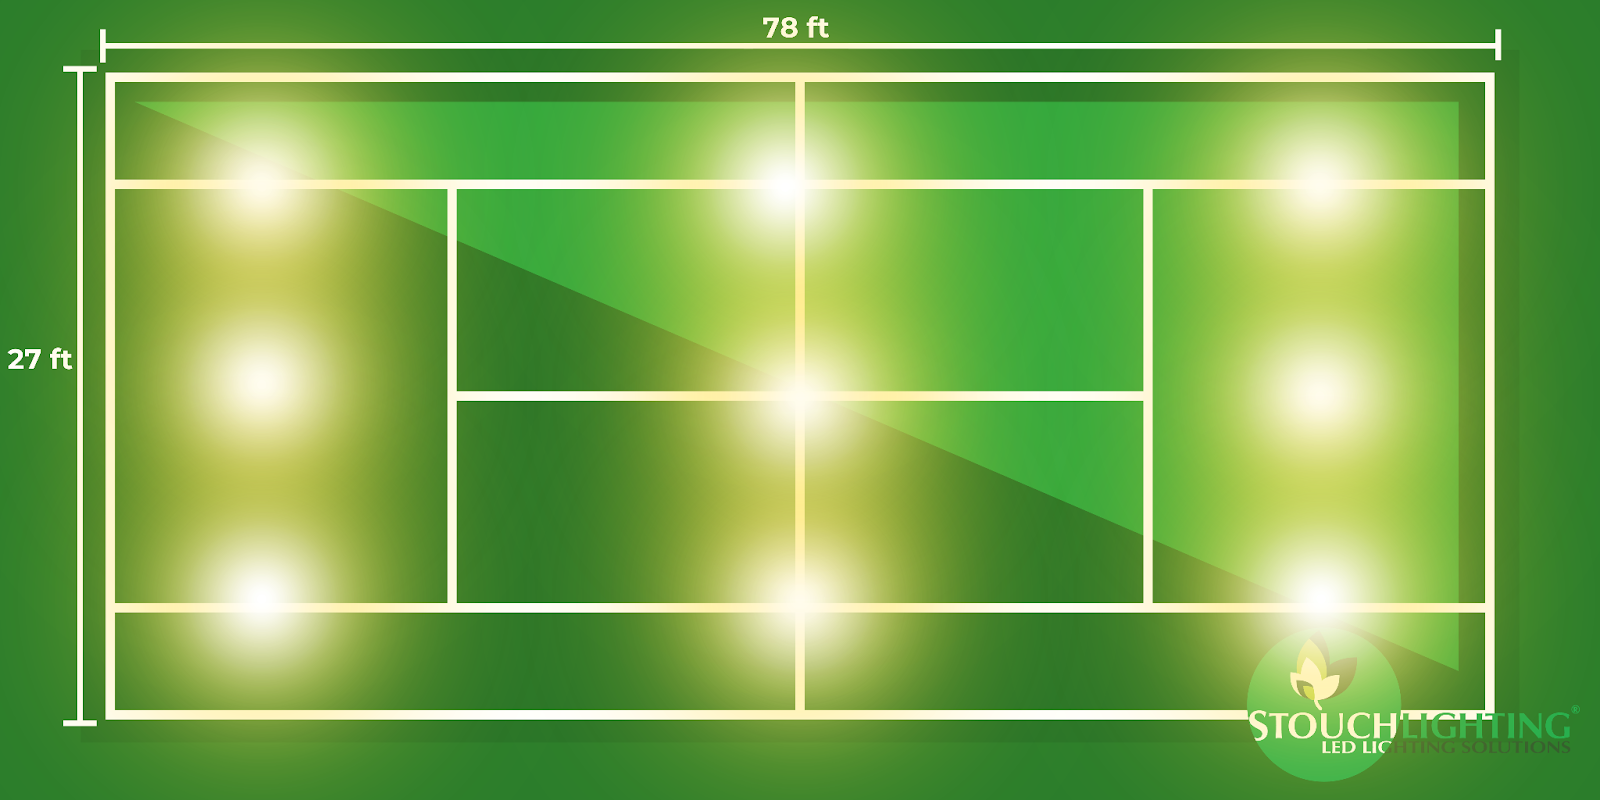 Professional tennis court lighting layout